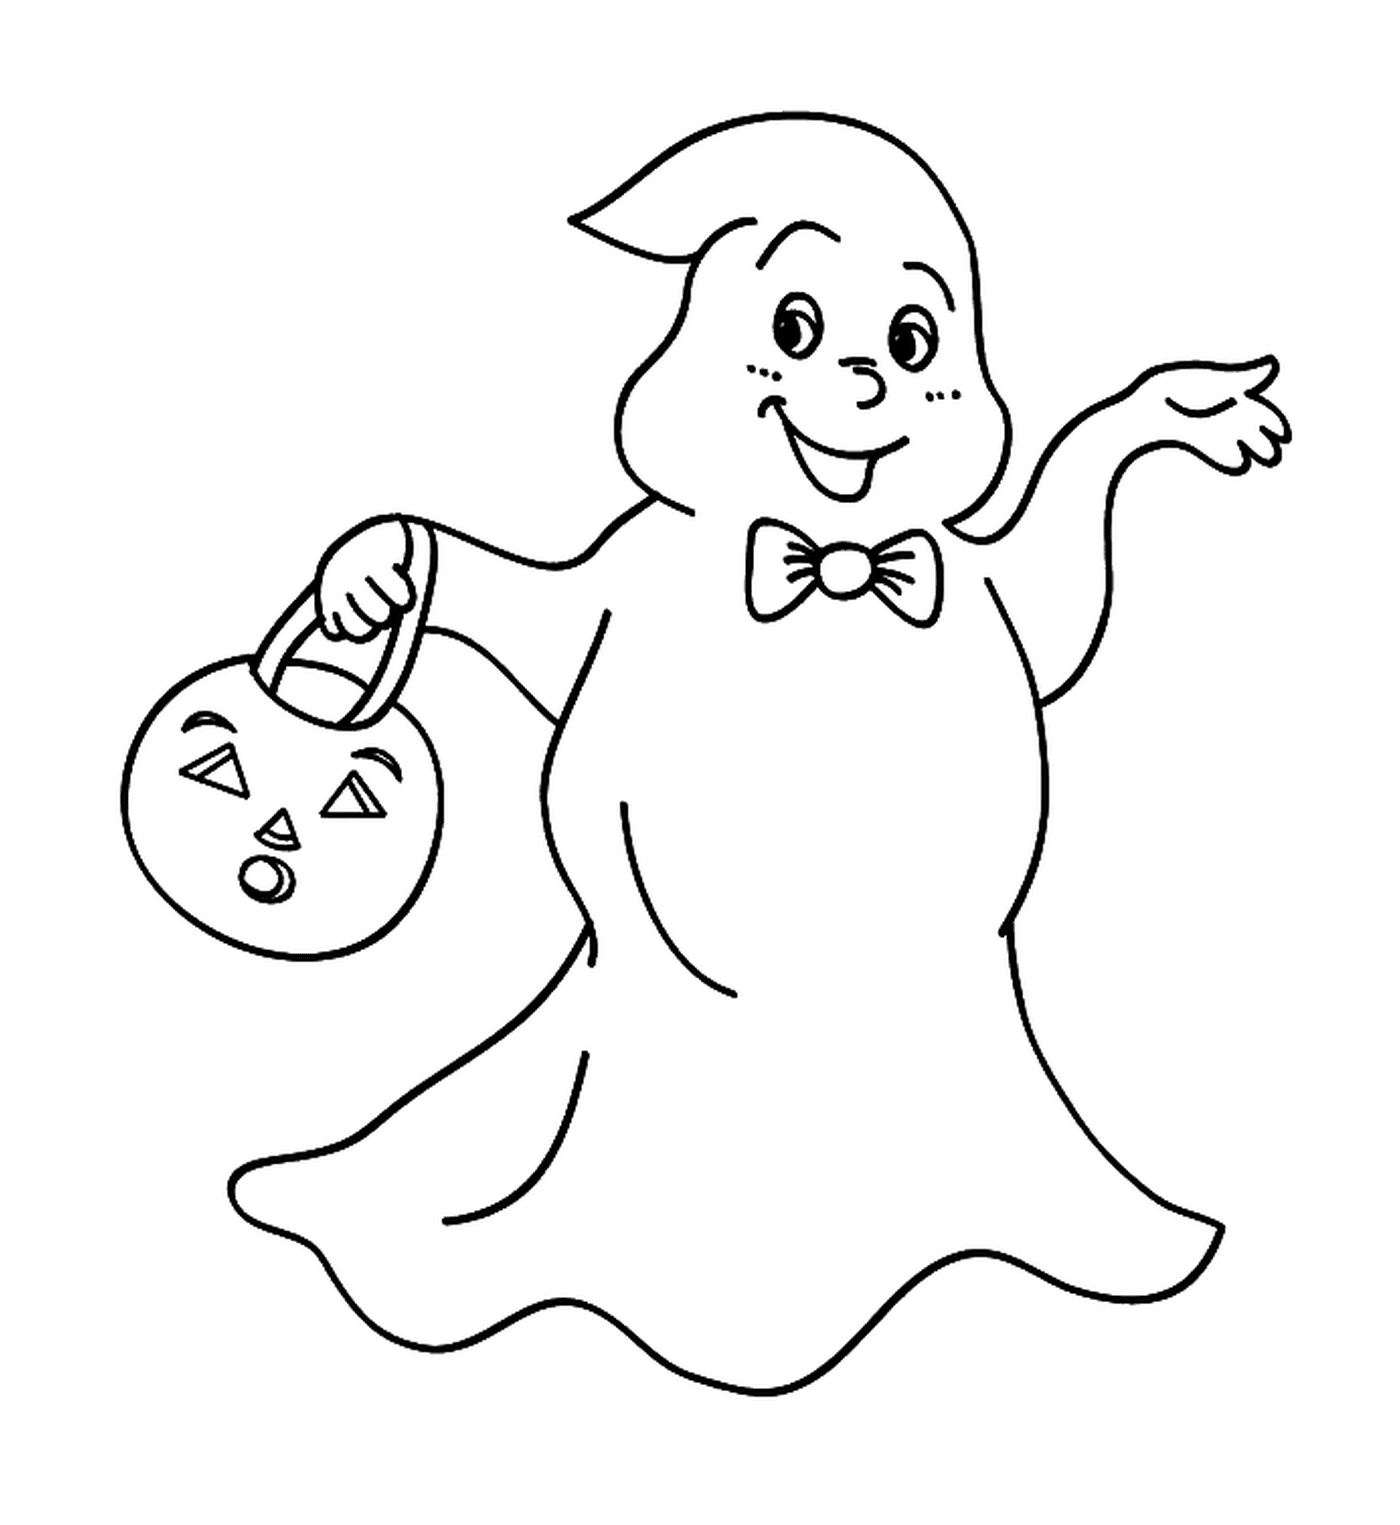  Ghost reivindica doces para o Halloween 